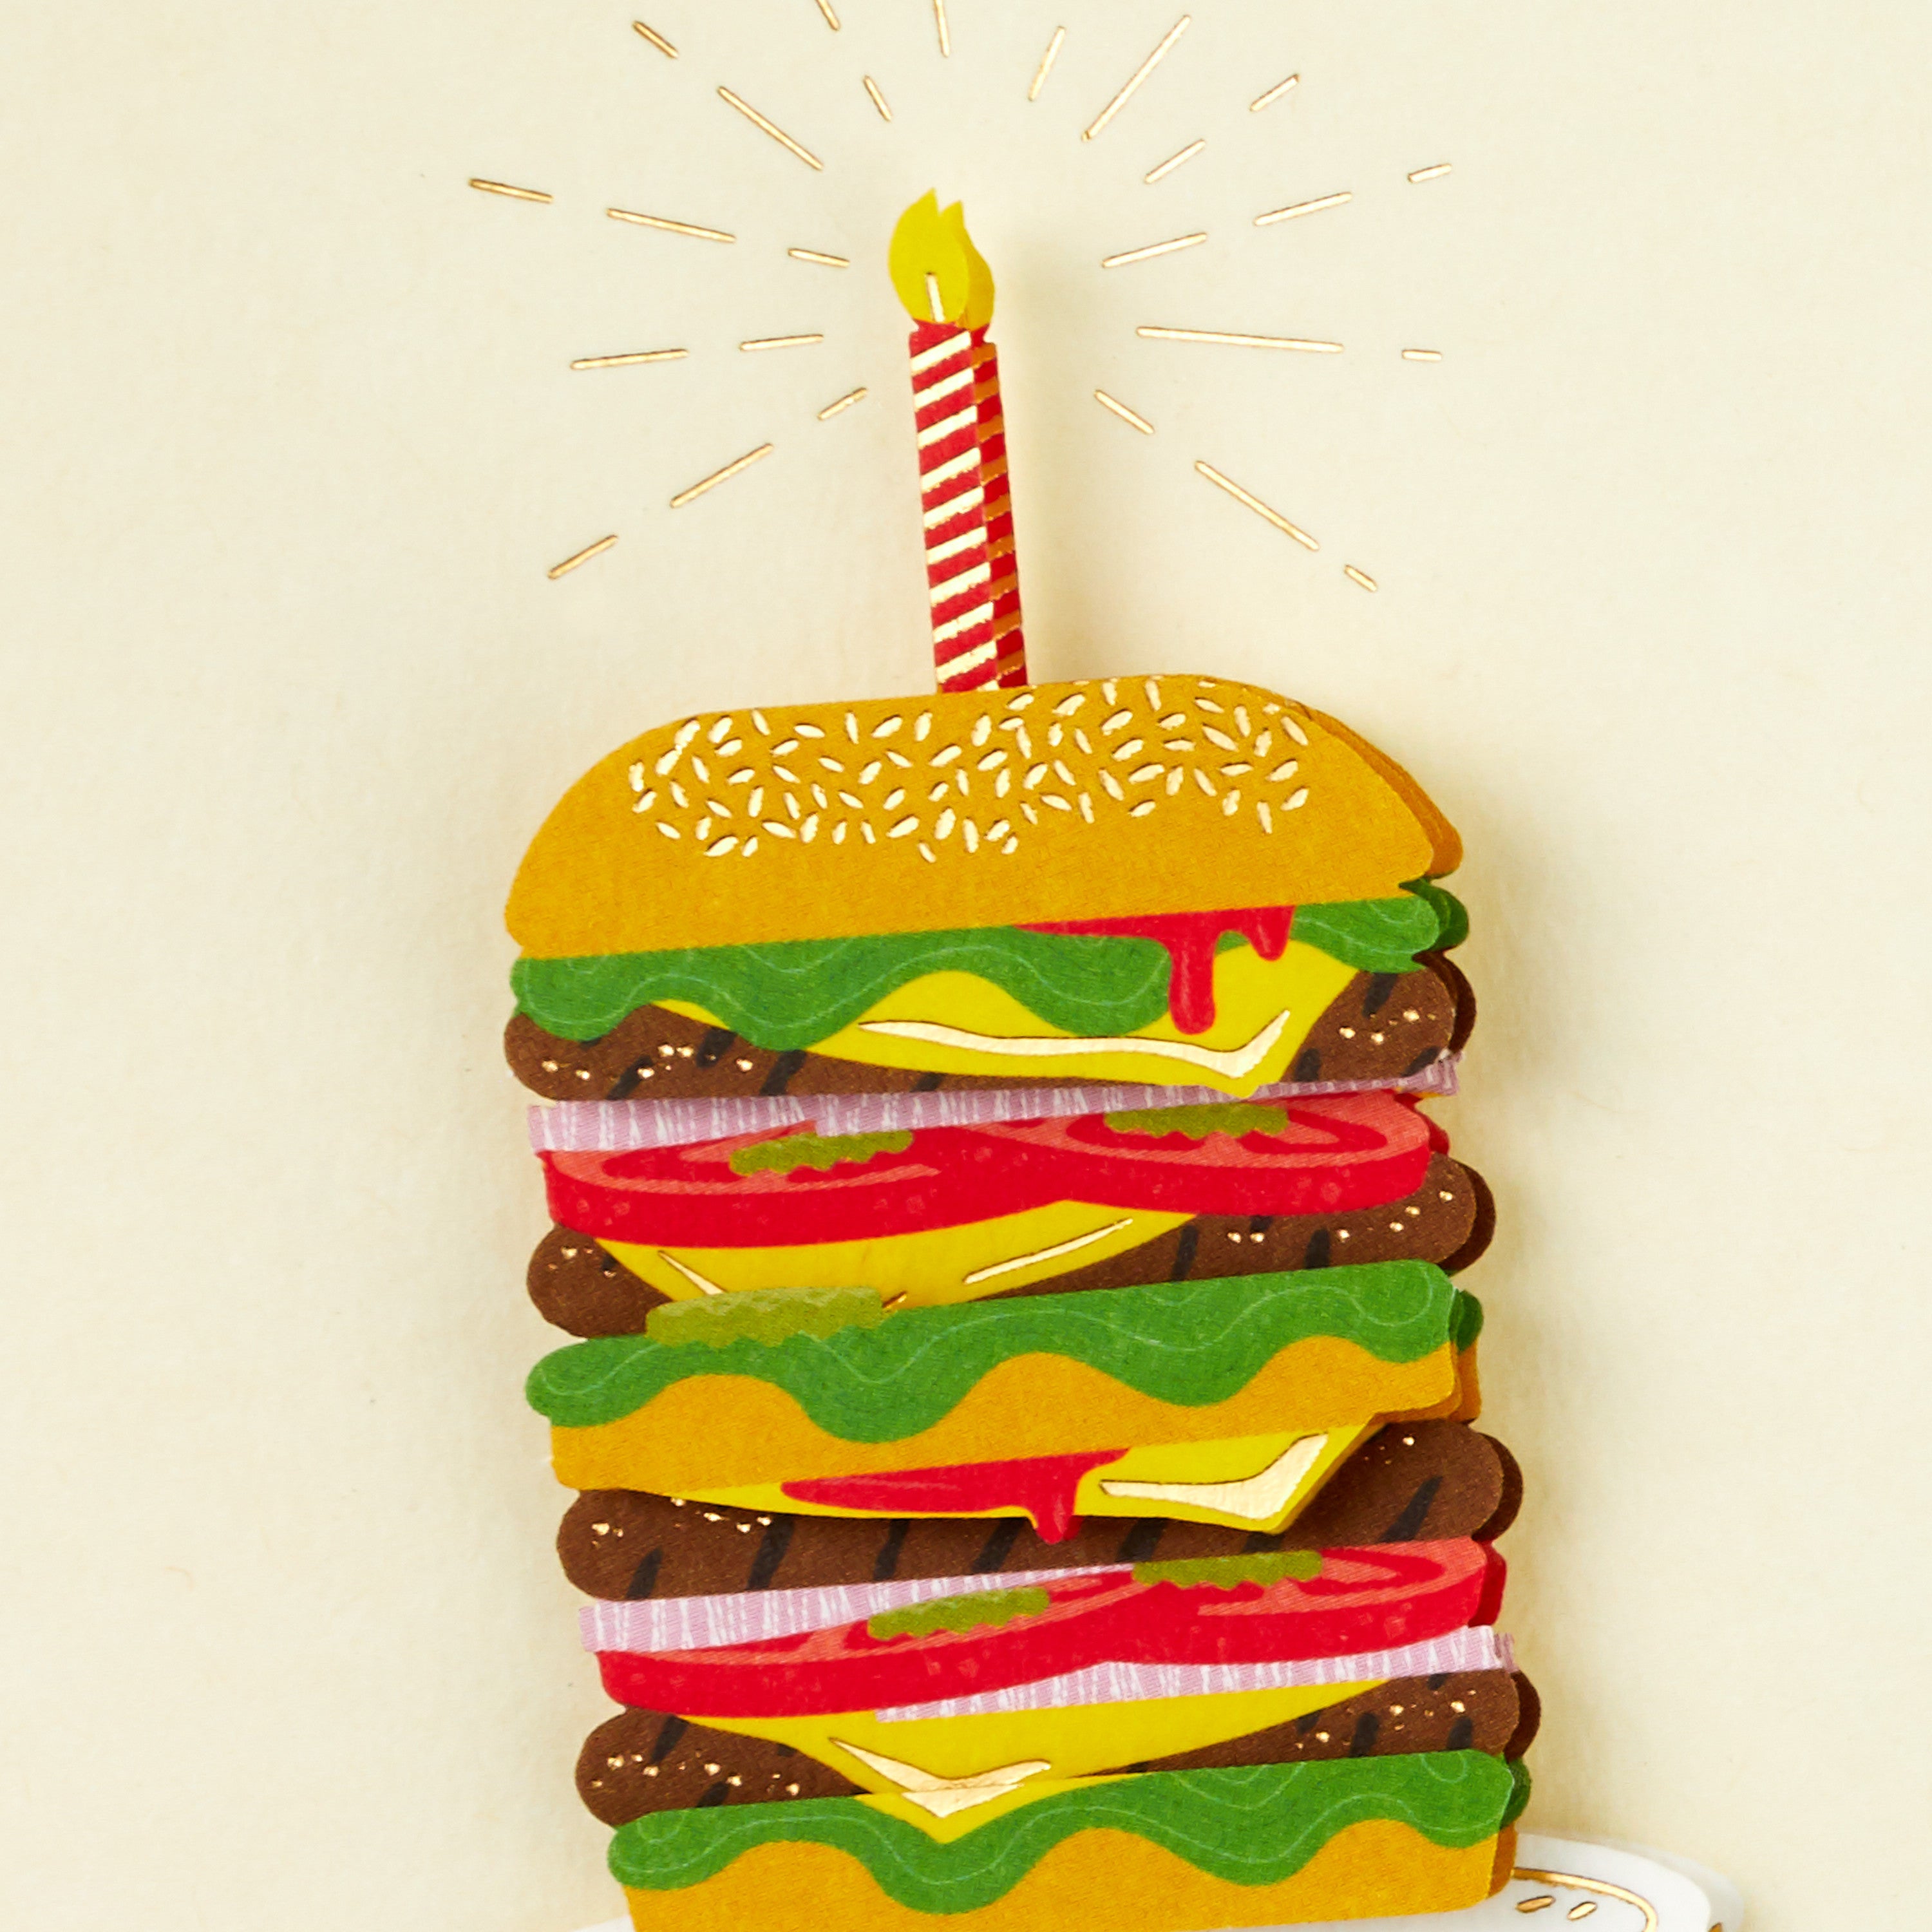 Hallmark Signature Birthday Card (Triple Cheeseburger)